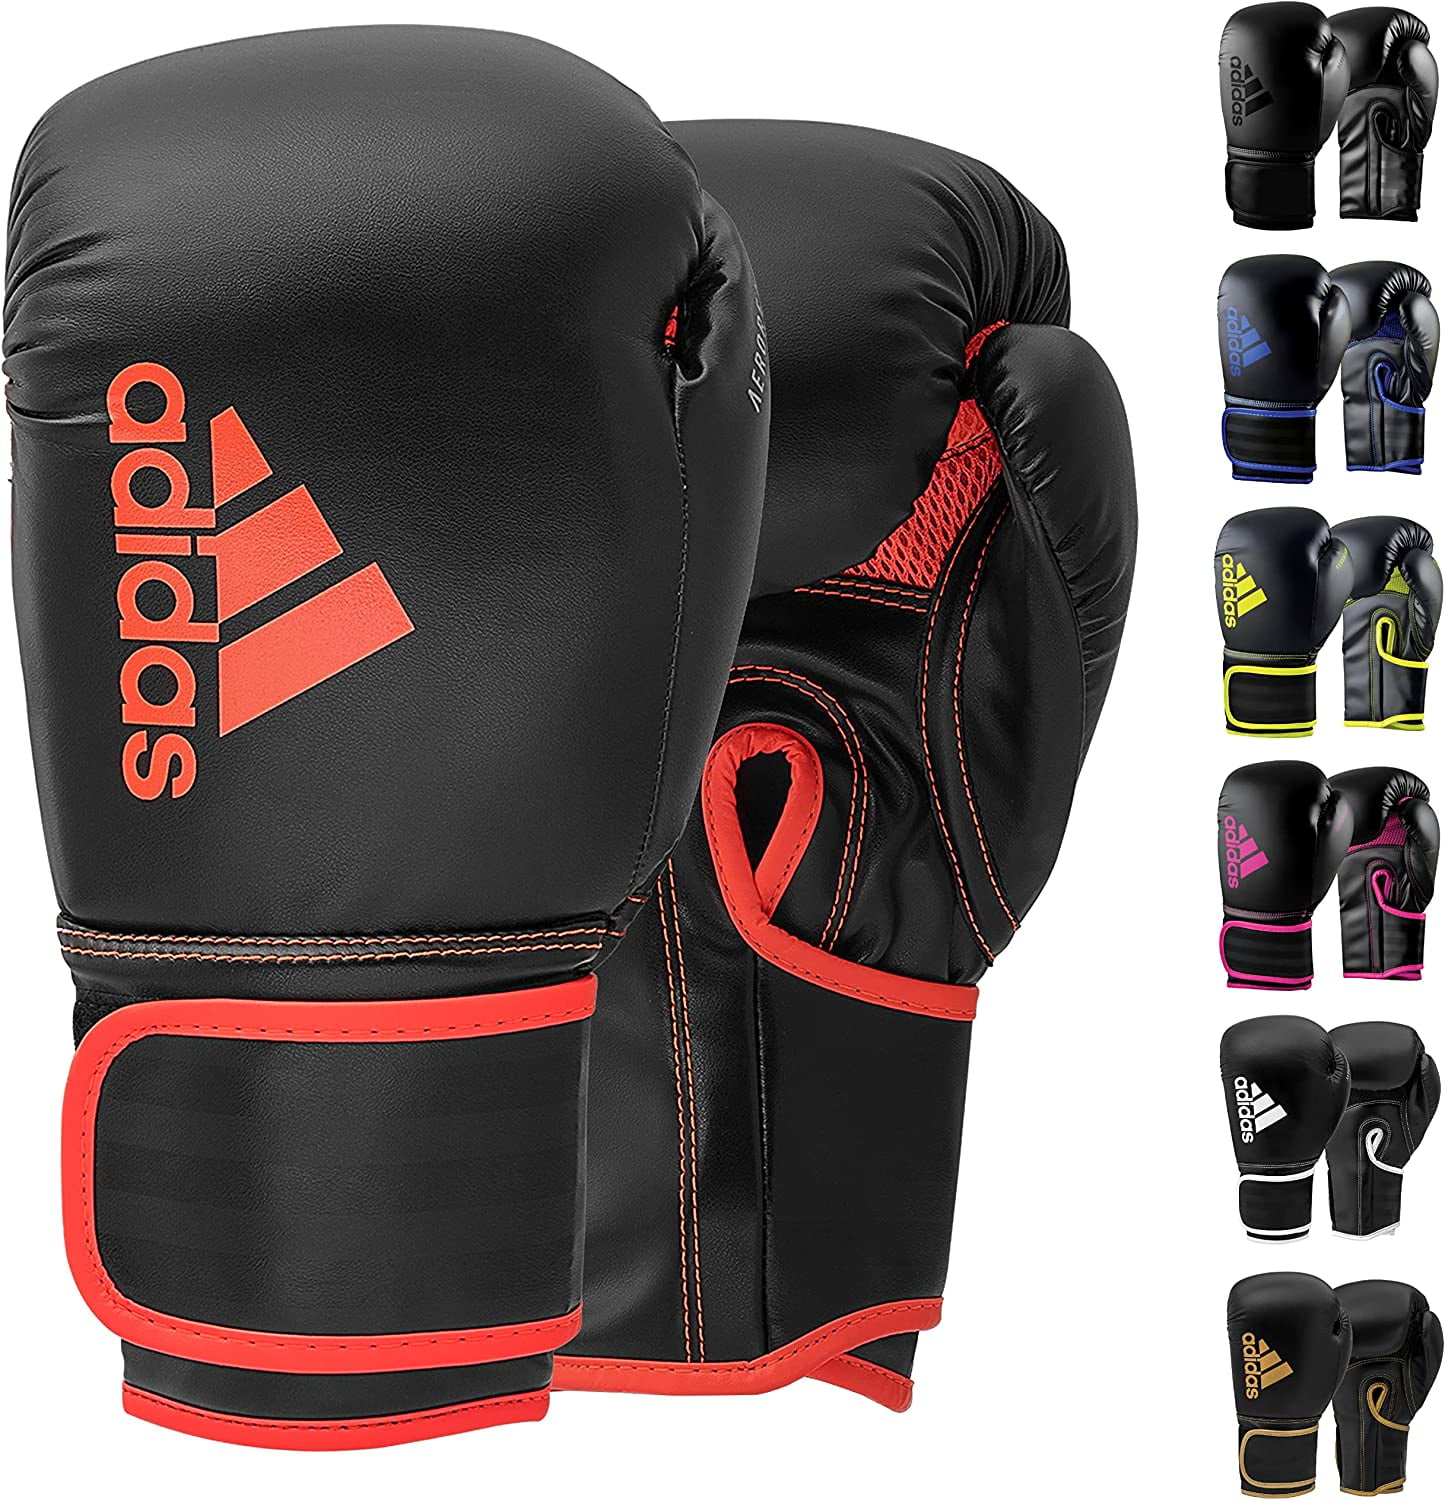 Oculto Cuota de admisión Pacífico Adidas Hybrid 80 Boxing Gloves, pair set - Training Gloves for Kickboxing - Sparring  Gloves for Men, Women and Kids - Walmart.com